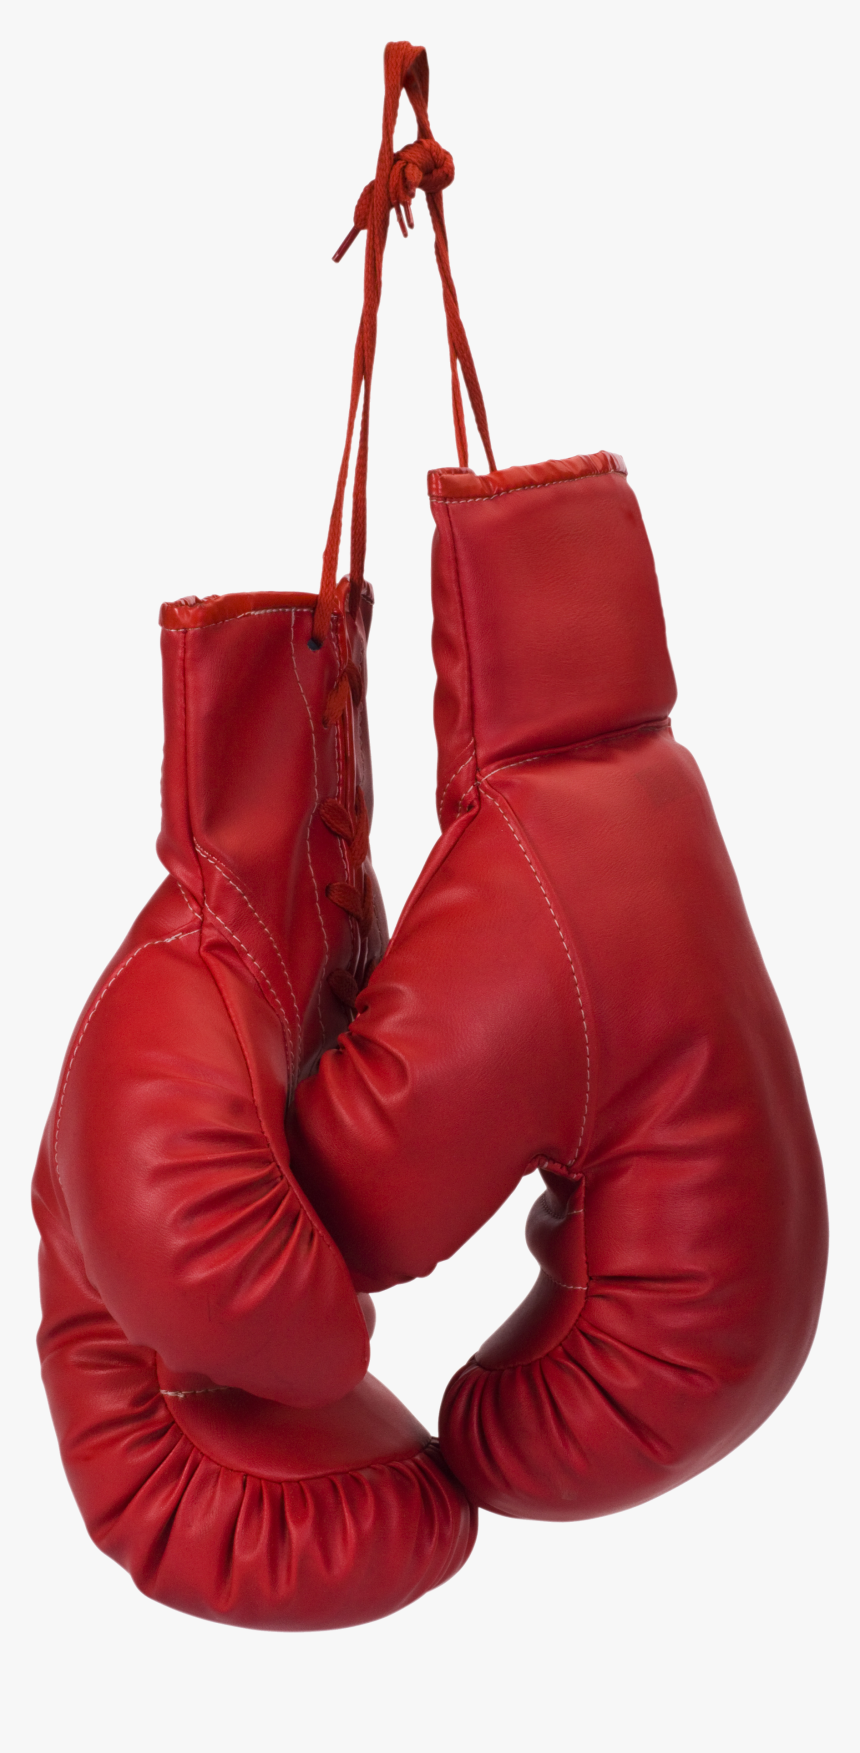 Hanging Boxing Gloves Png Image - Hanging Boxing Gloves Png, Transparent Png, Free Download